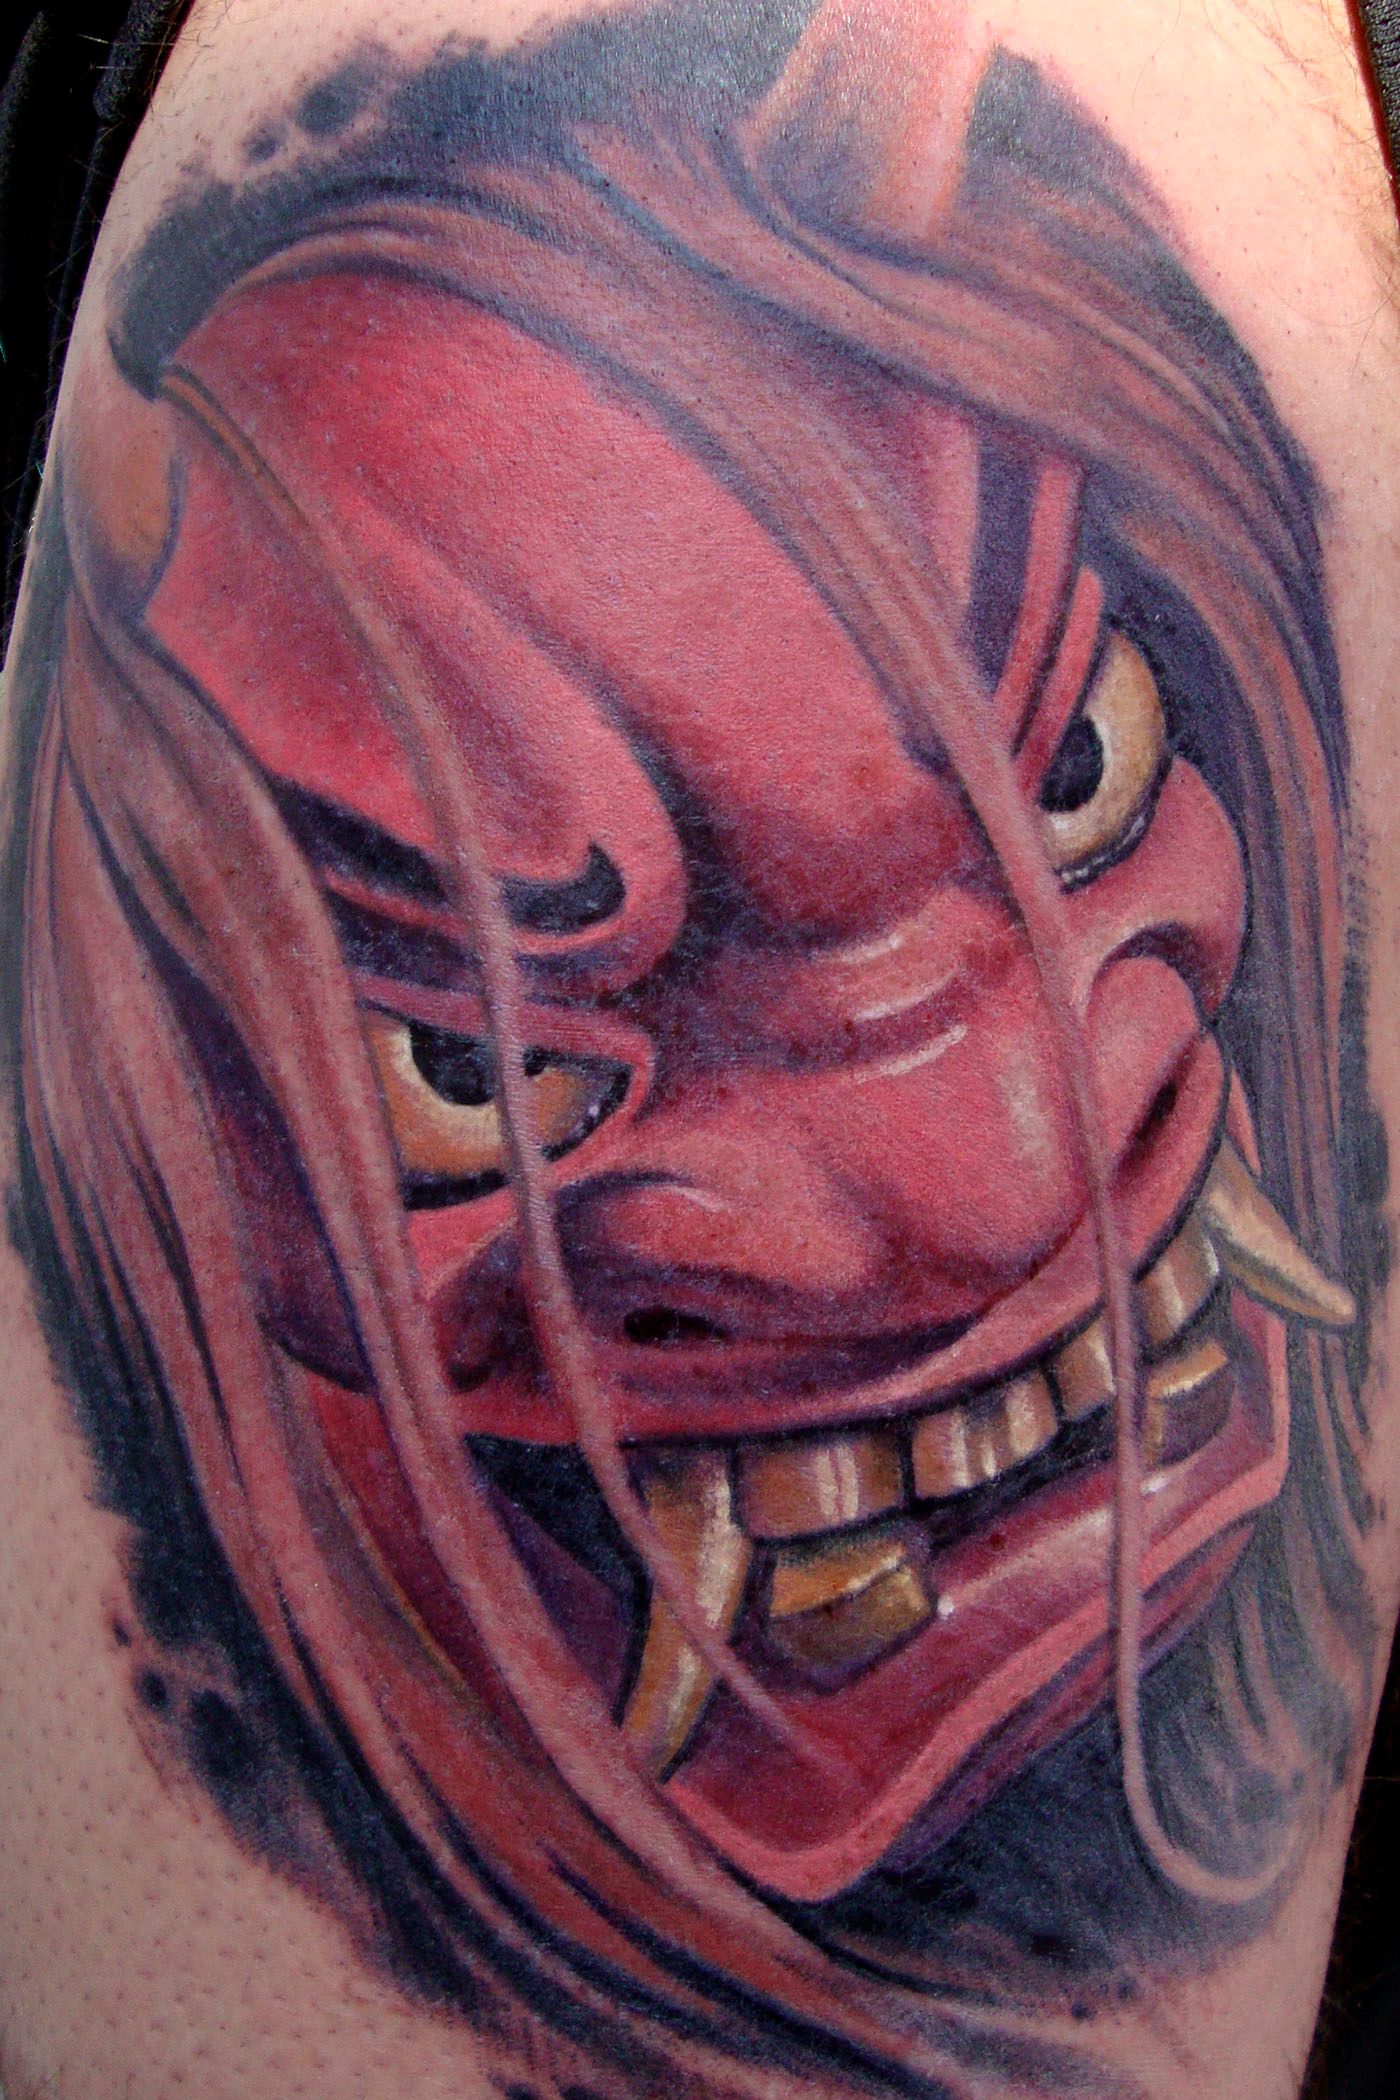 Tattoo uploaded by Blacksmith.Tattoo • Gangsta mask LV